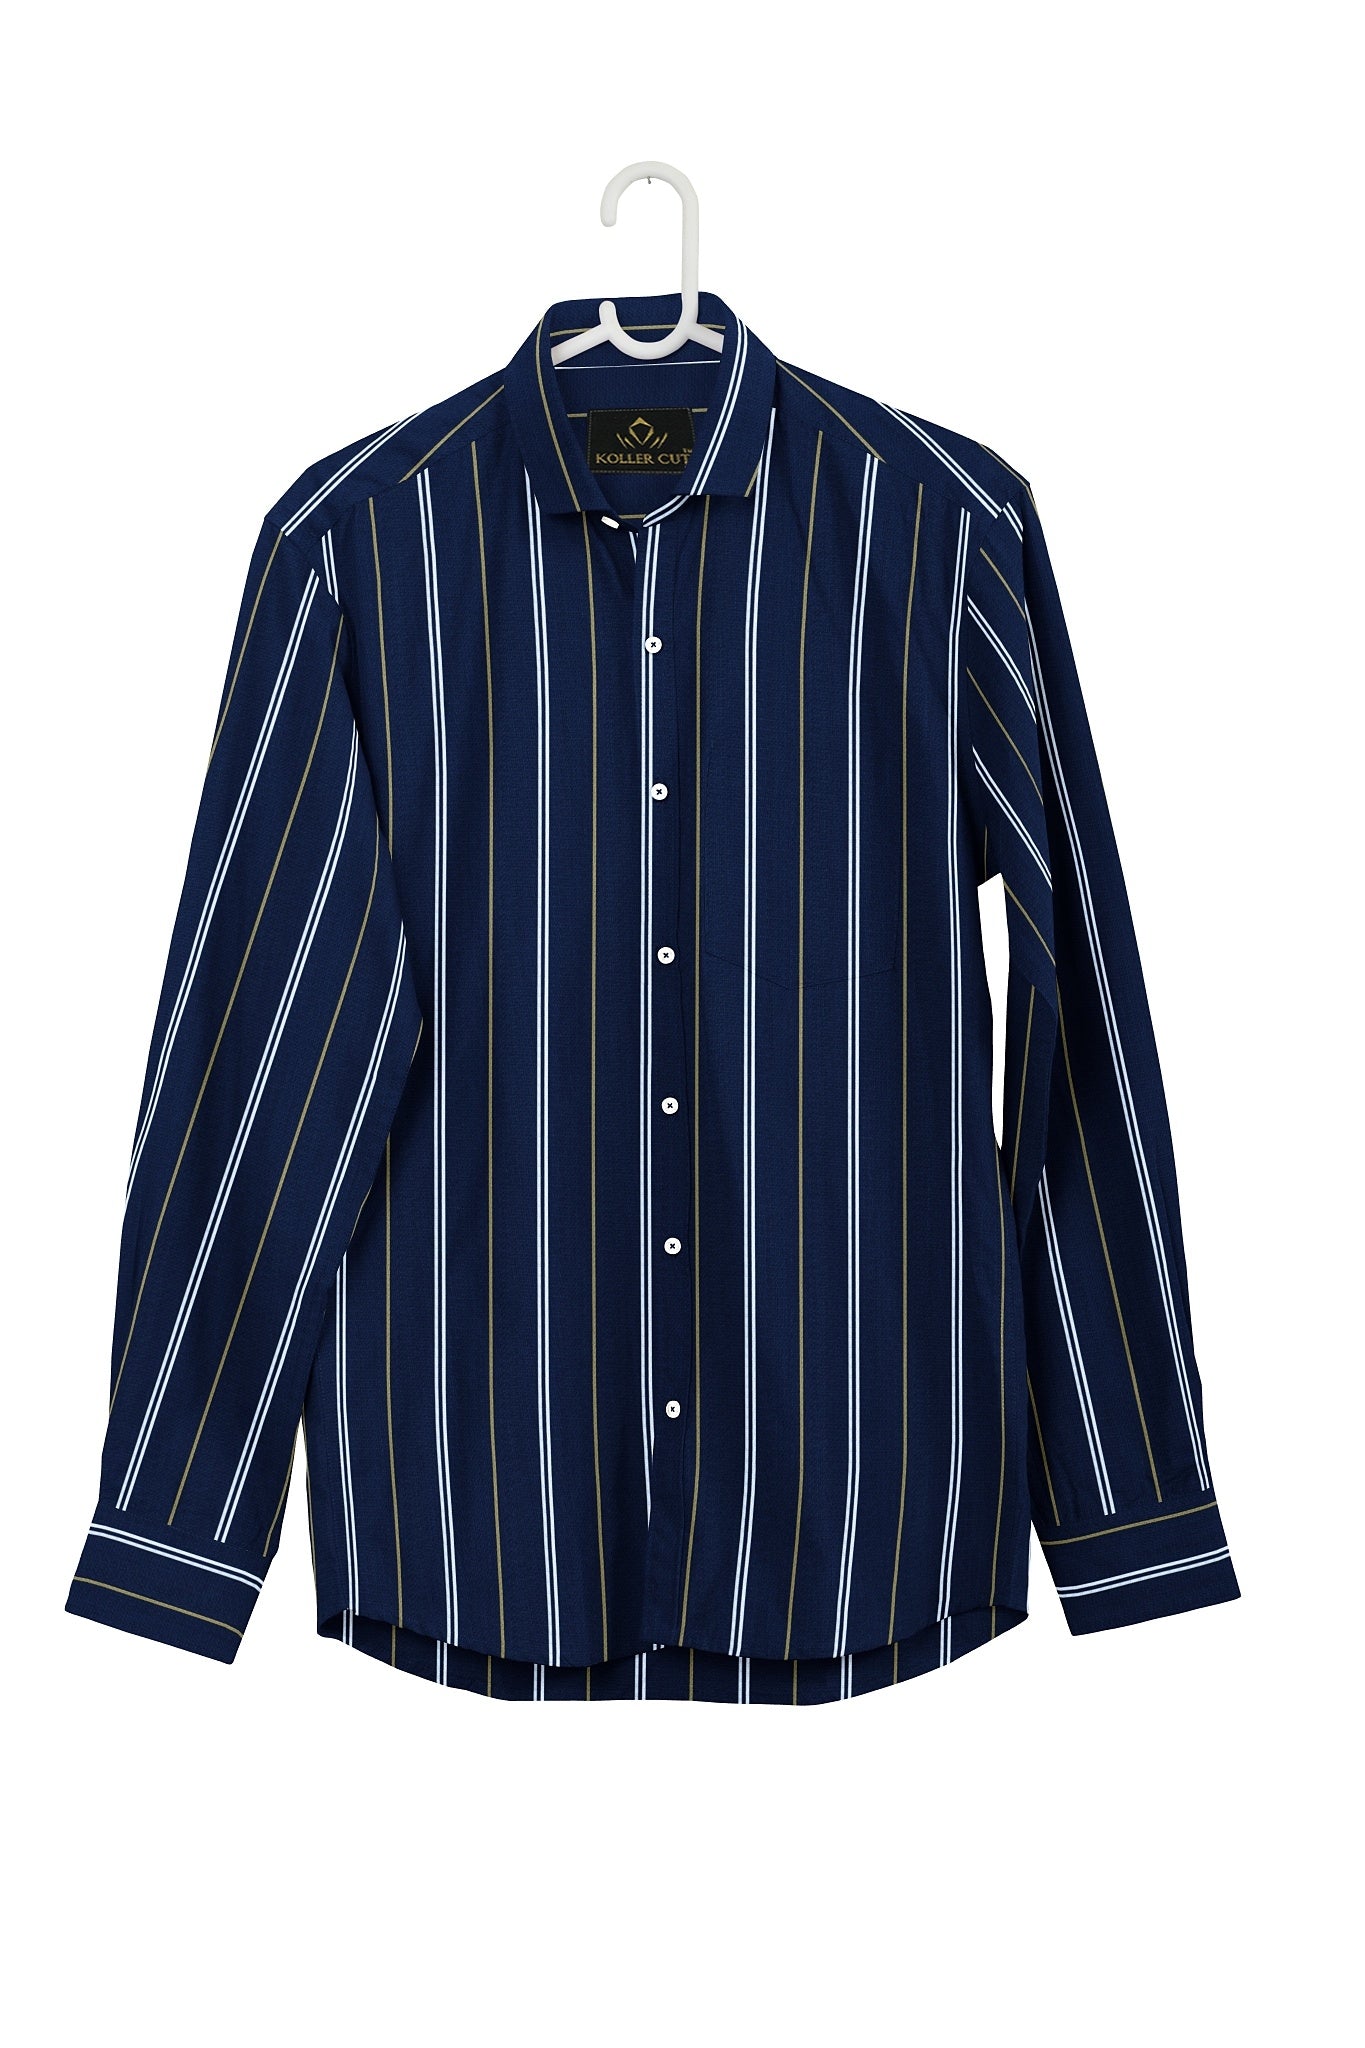 Mazarine blue with Moth Cream and White Stripes Cotton Shirt